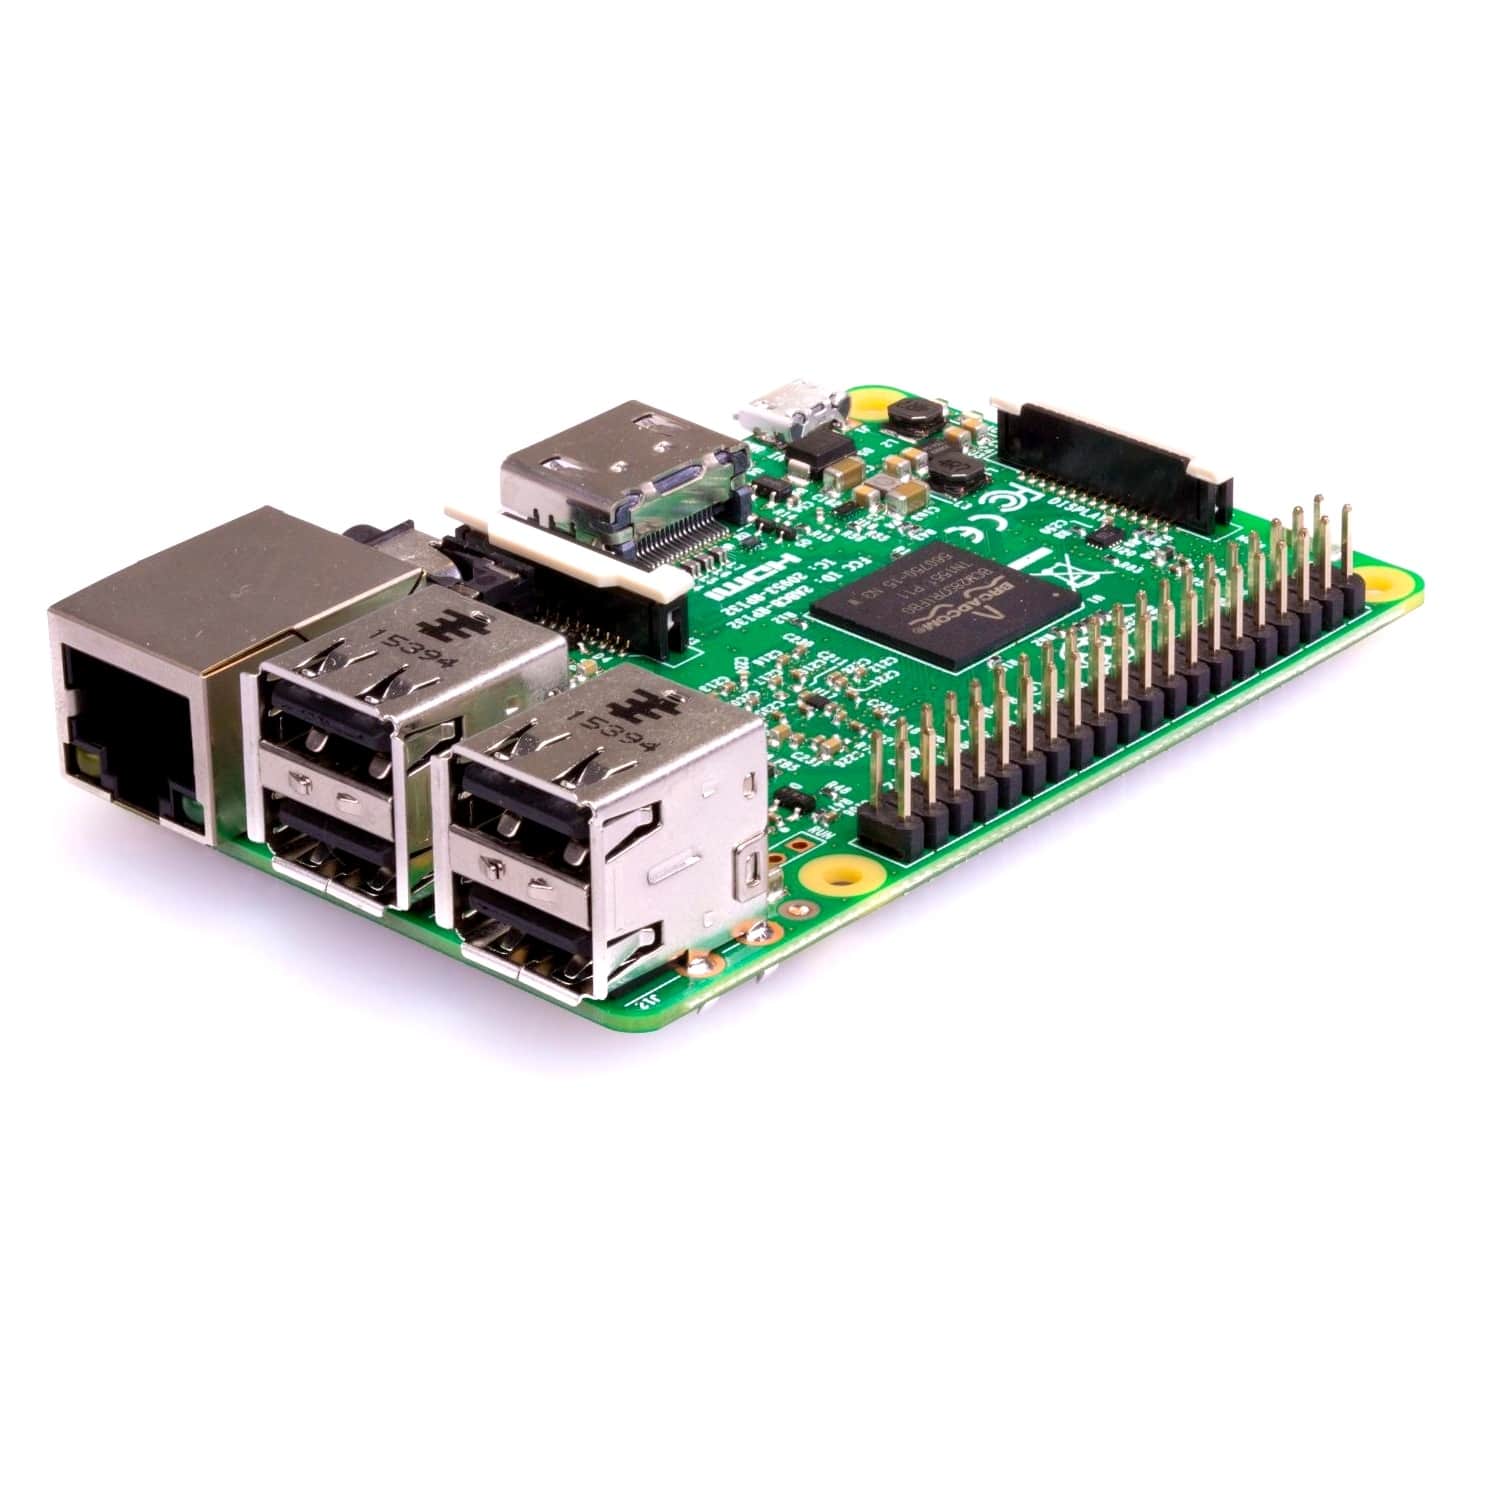 RASPBERRY-PI RASPBERRYPI3-MODB-1GB SBC, Raspberry Pi3 B, BCM2837, Quadcore  64bit, 1GB RAM, MicroSD, Wifi, HDMI, 4xUSB 2 ports